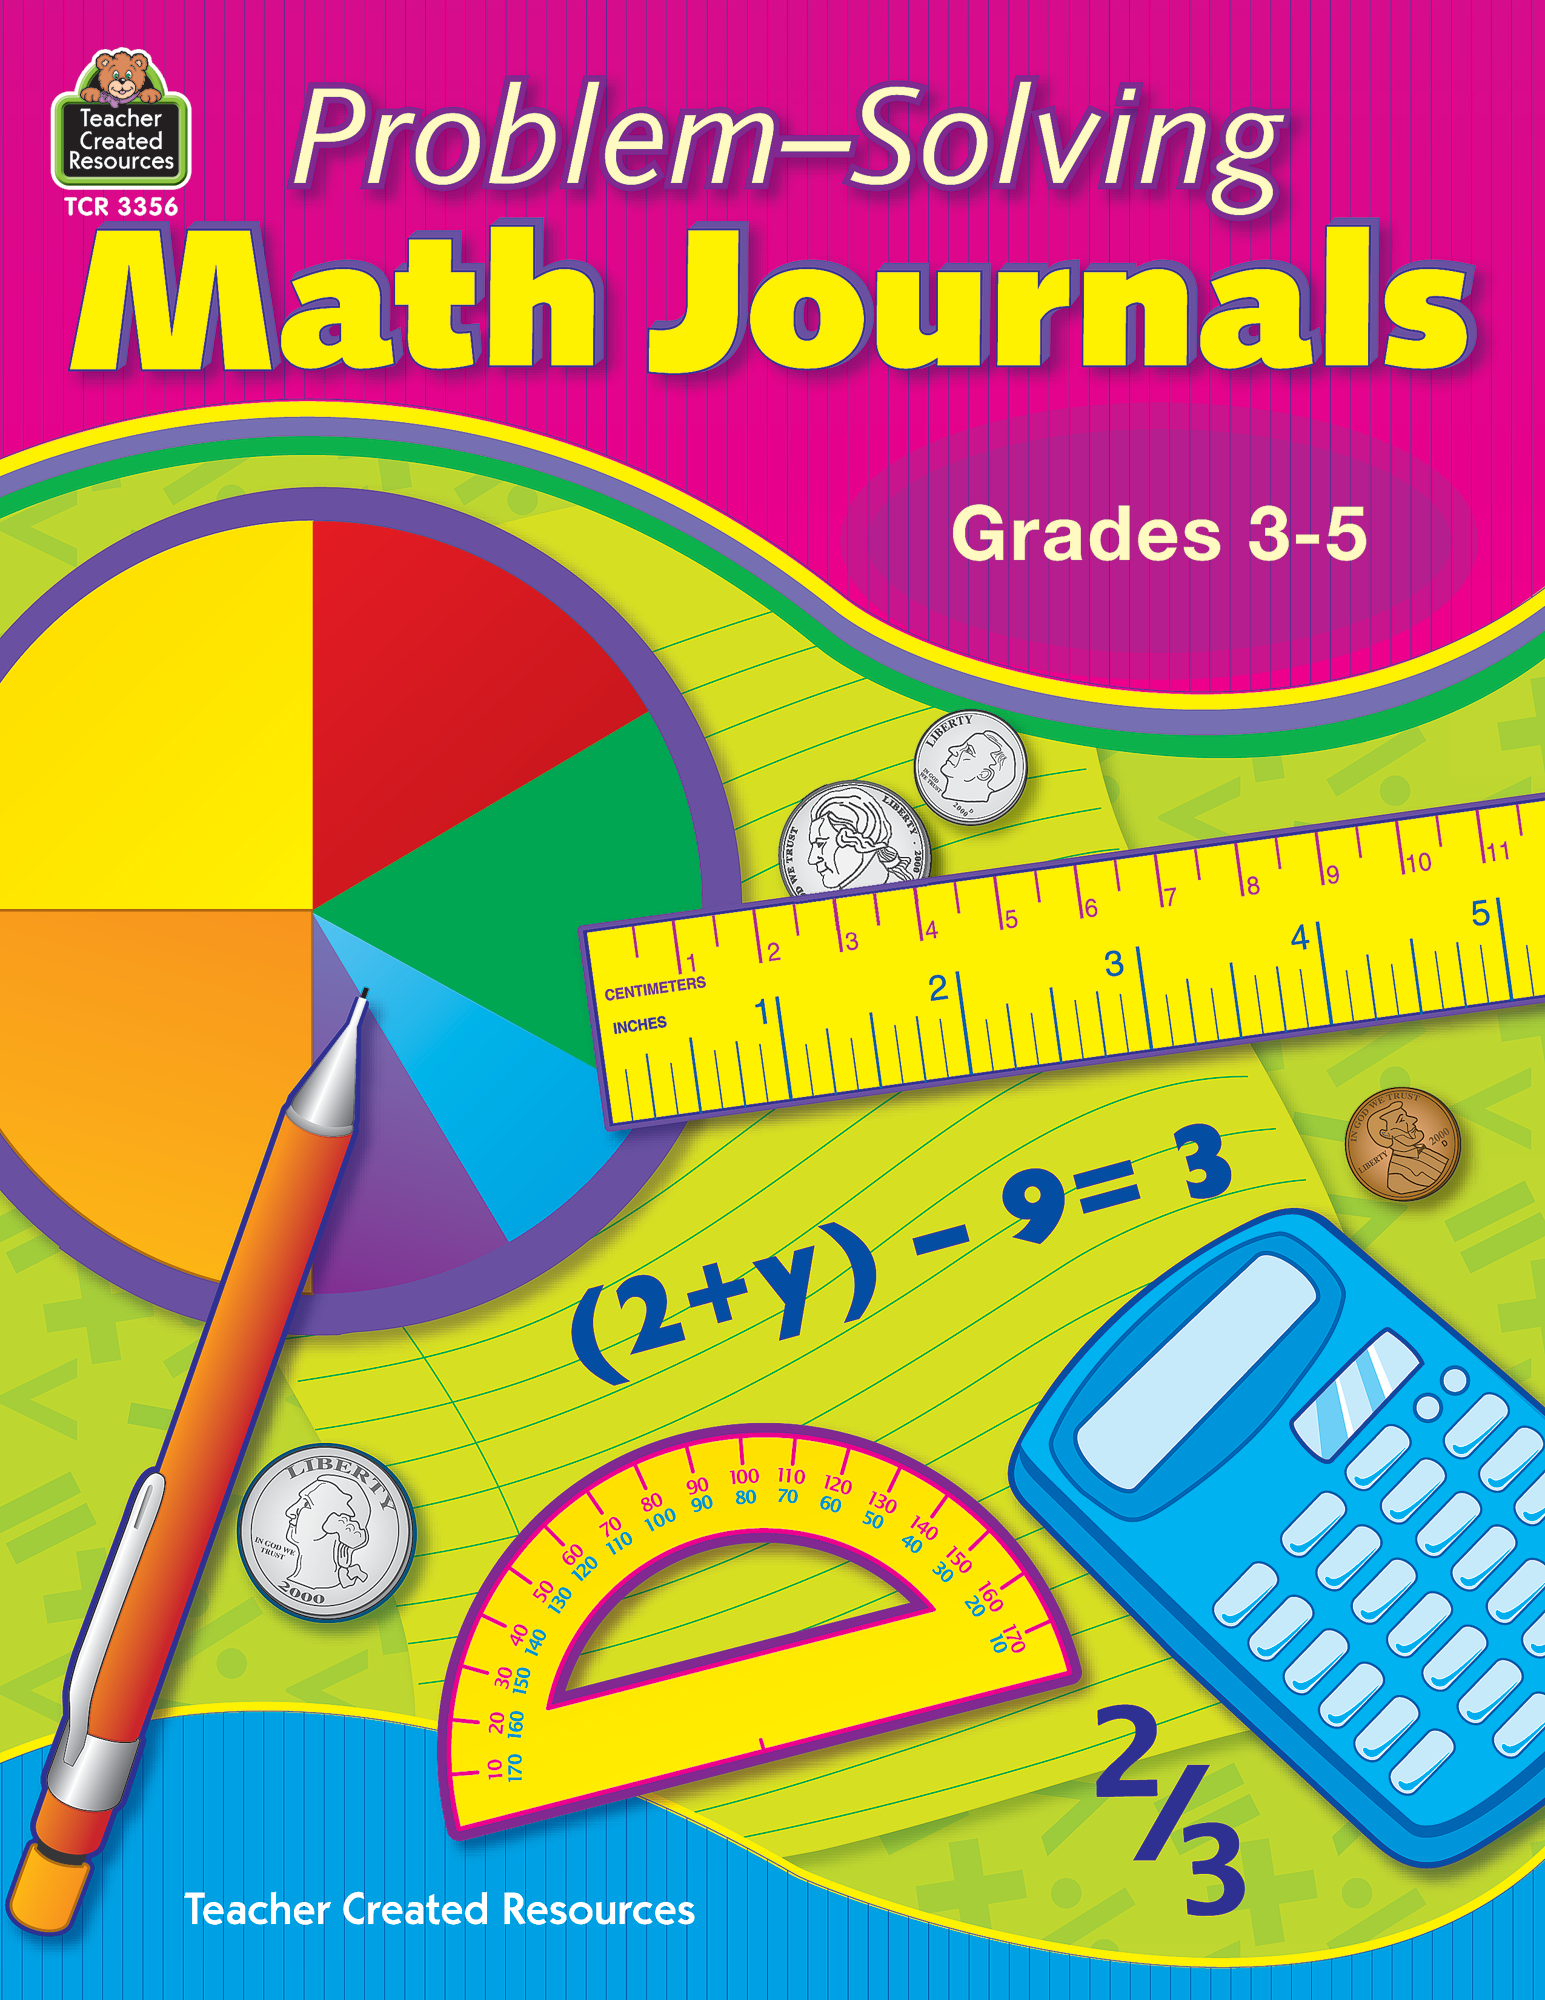 Mathematics problems. Математика. Solving Math problems. Фон математика. Math Journal.